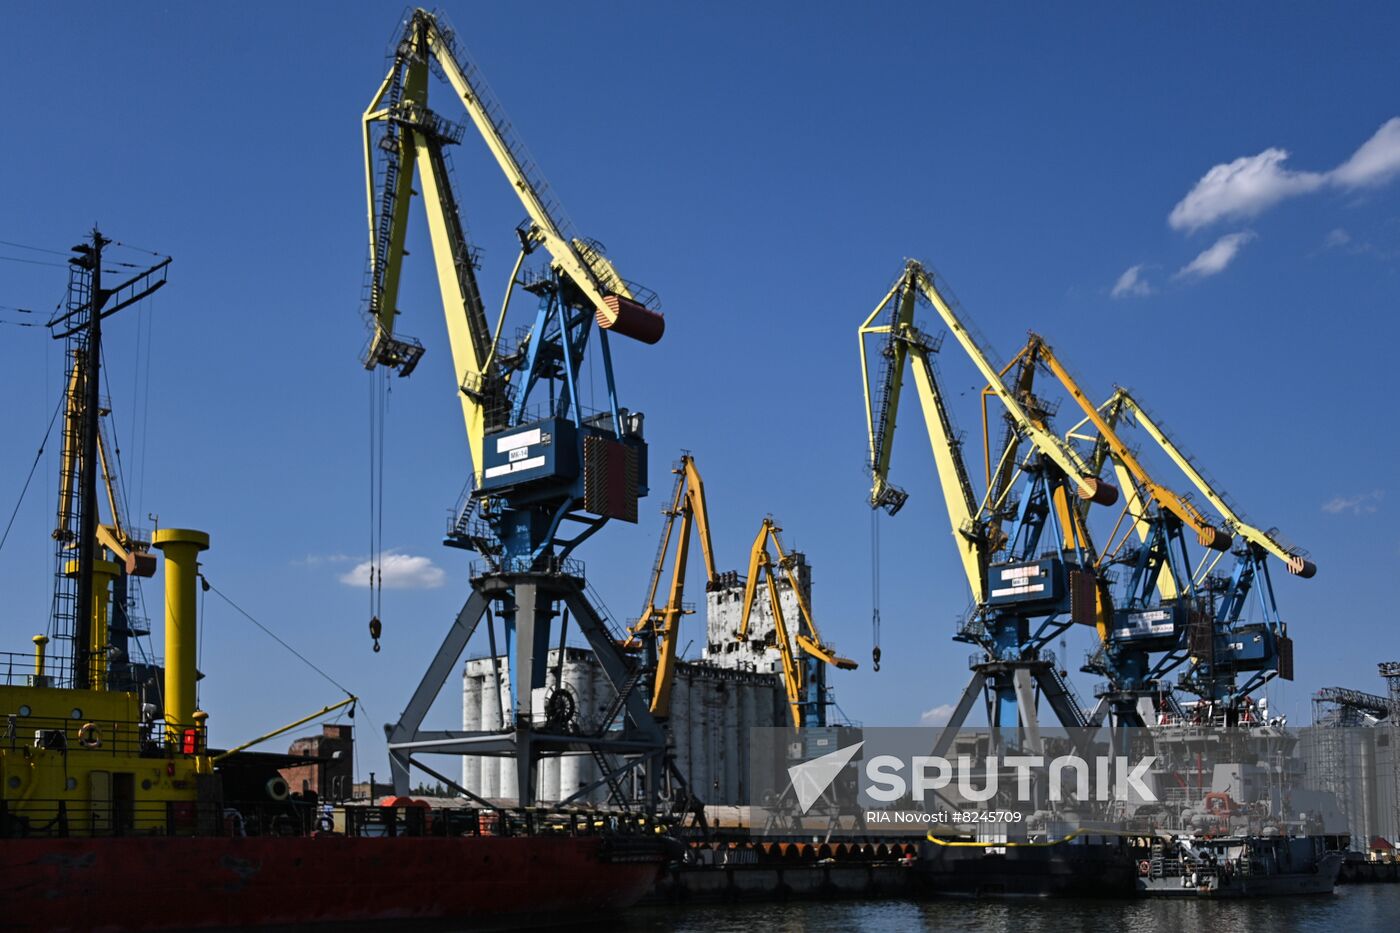 DPR Russia Ukraine Military Operation Mariupol Port